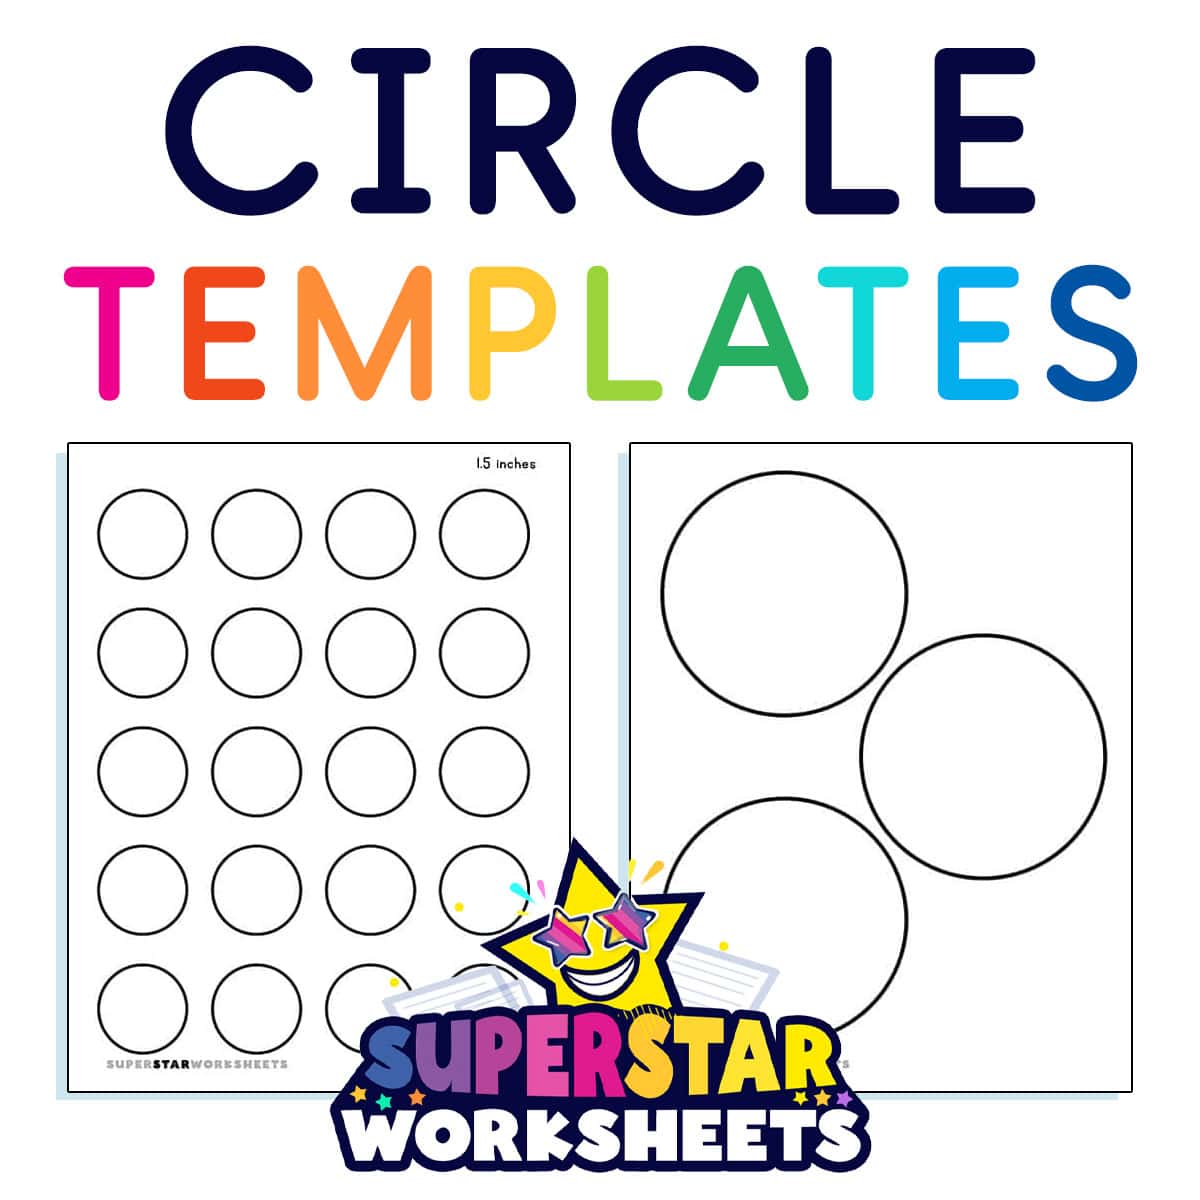 Circle Template - Superstar Worksheets